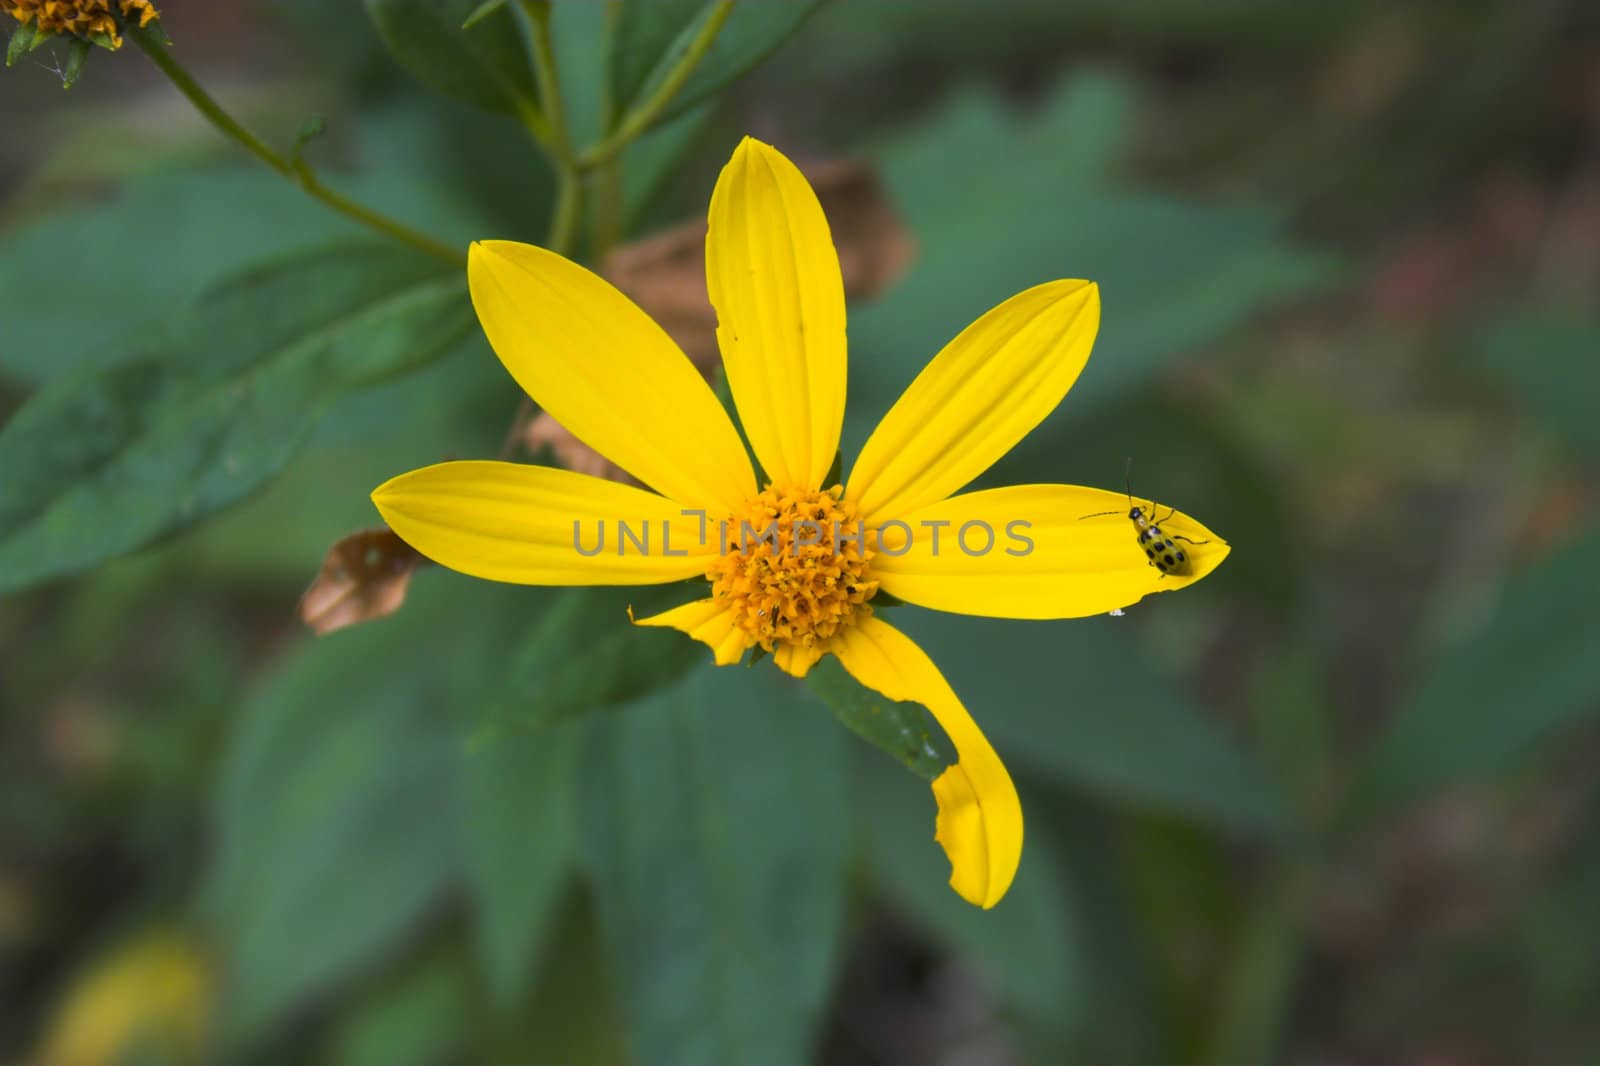 Small bug sitting on a half eaten yellow flower